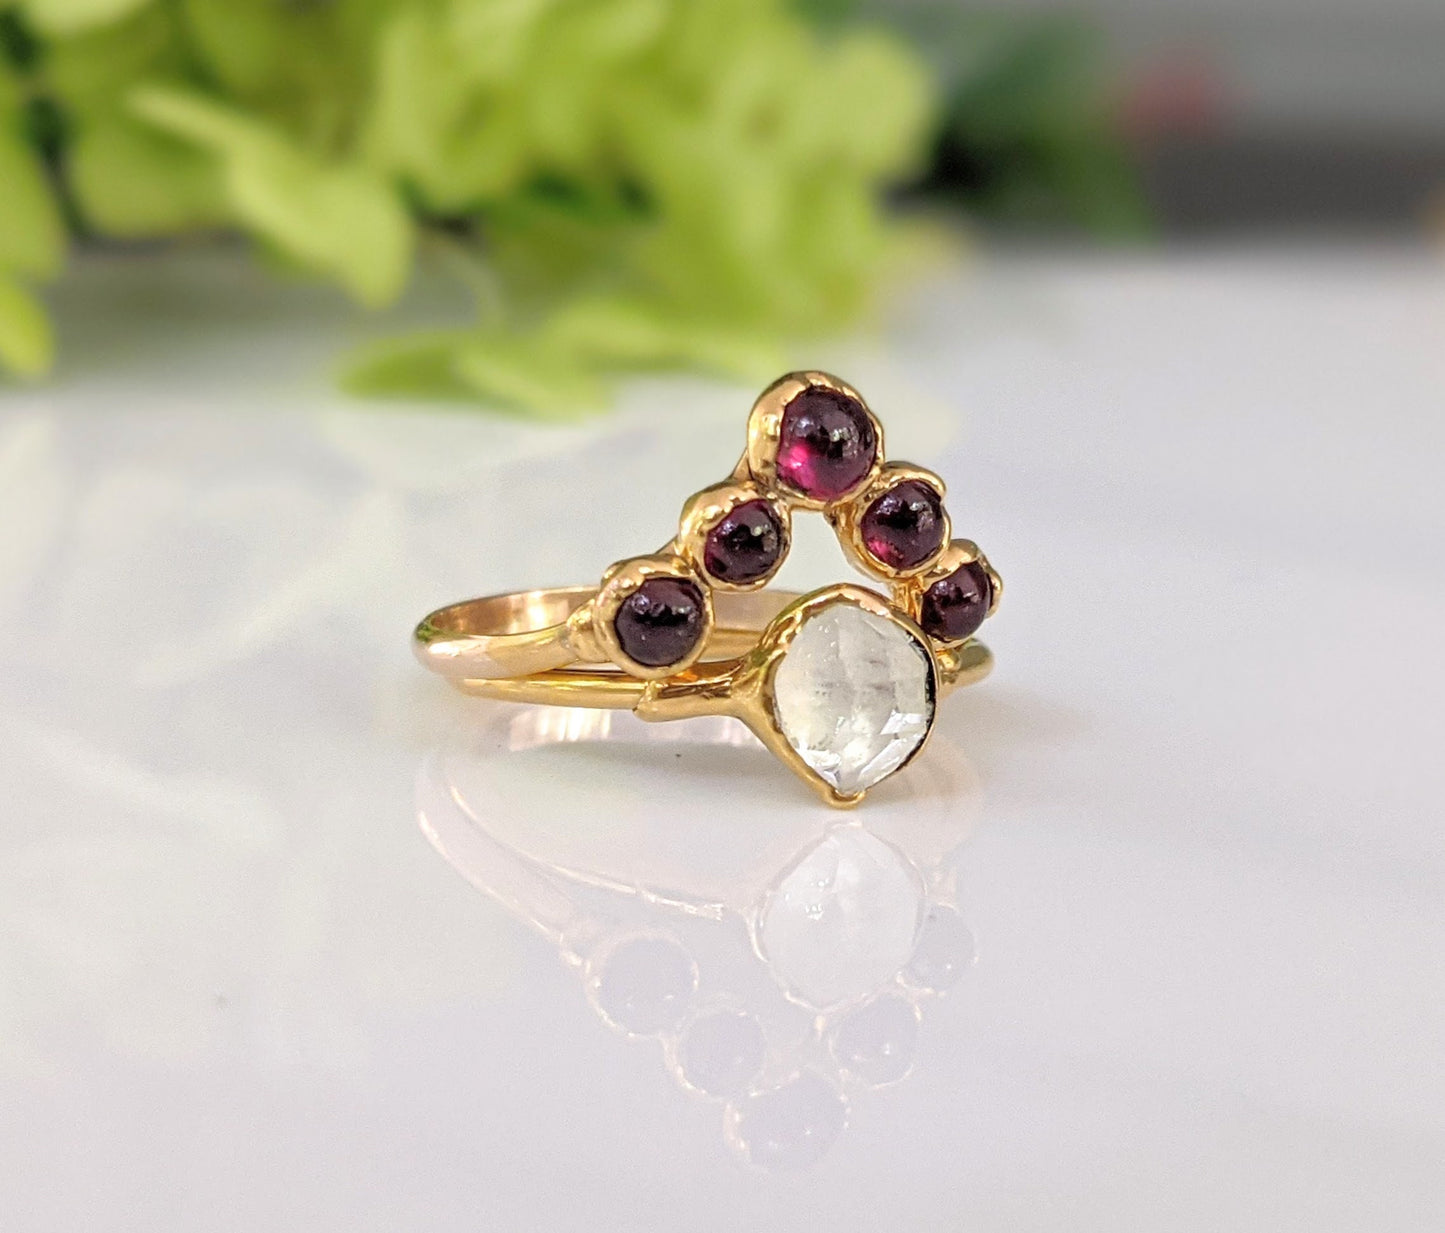 Herkimer diamond and Ruby Chevron wedding ring set in 18k Gold